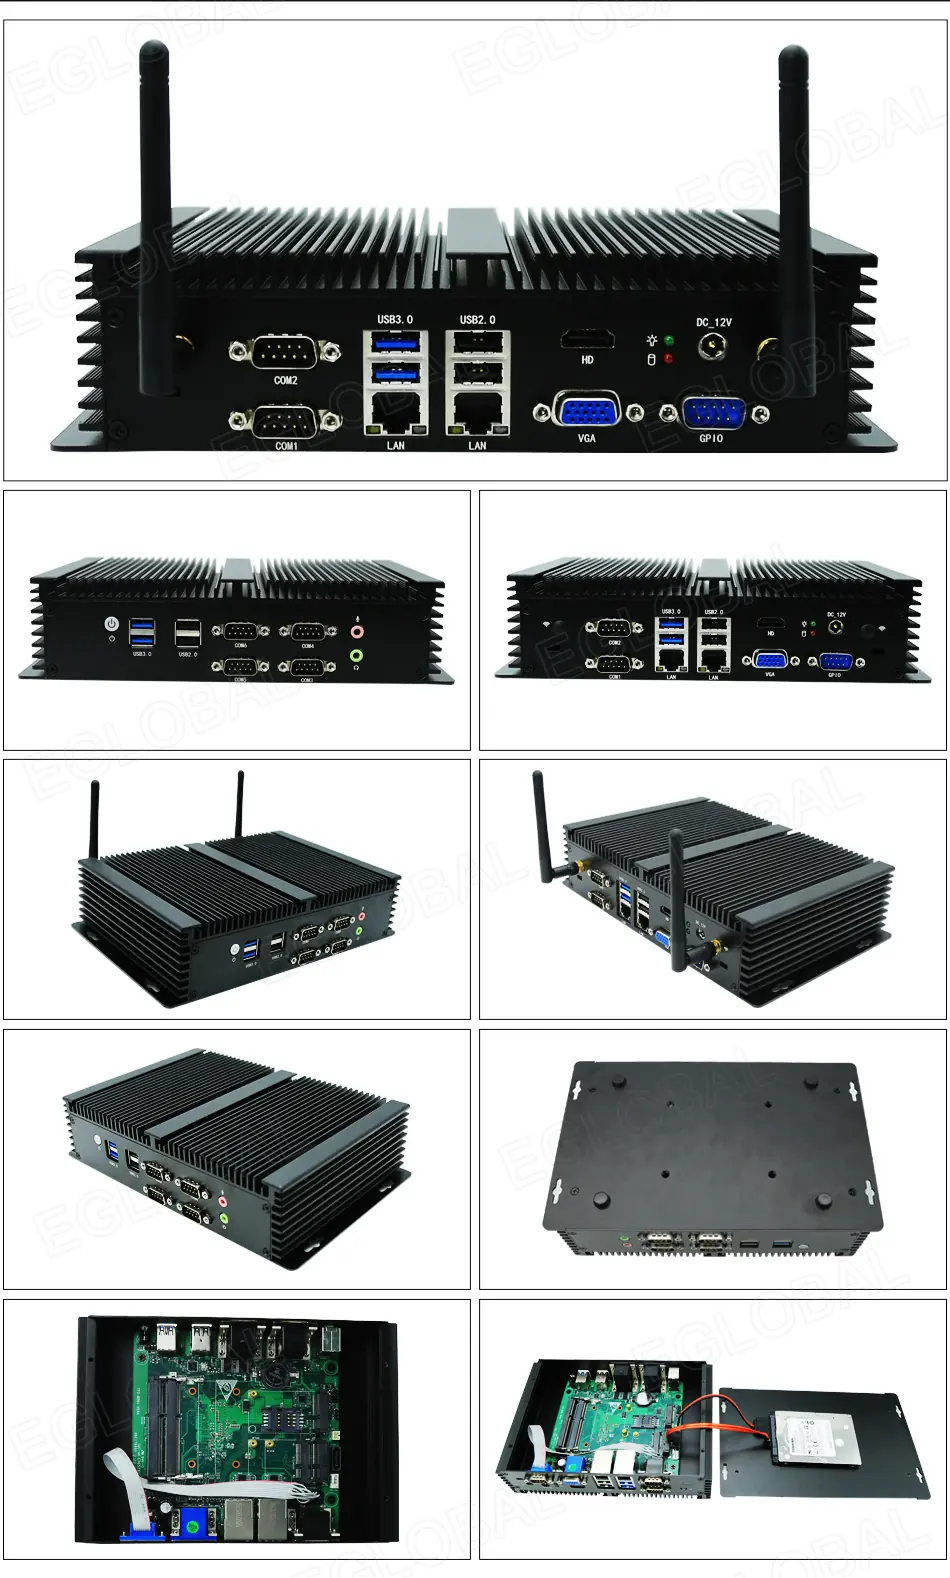 Photos of Industrial fanless mini PC with Intel Core i5-4278U, 8*USB, 6*COM, GPIO, LAN, HDMI and VGA, WiFi, Bluetooth